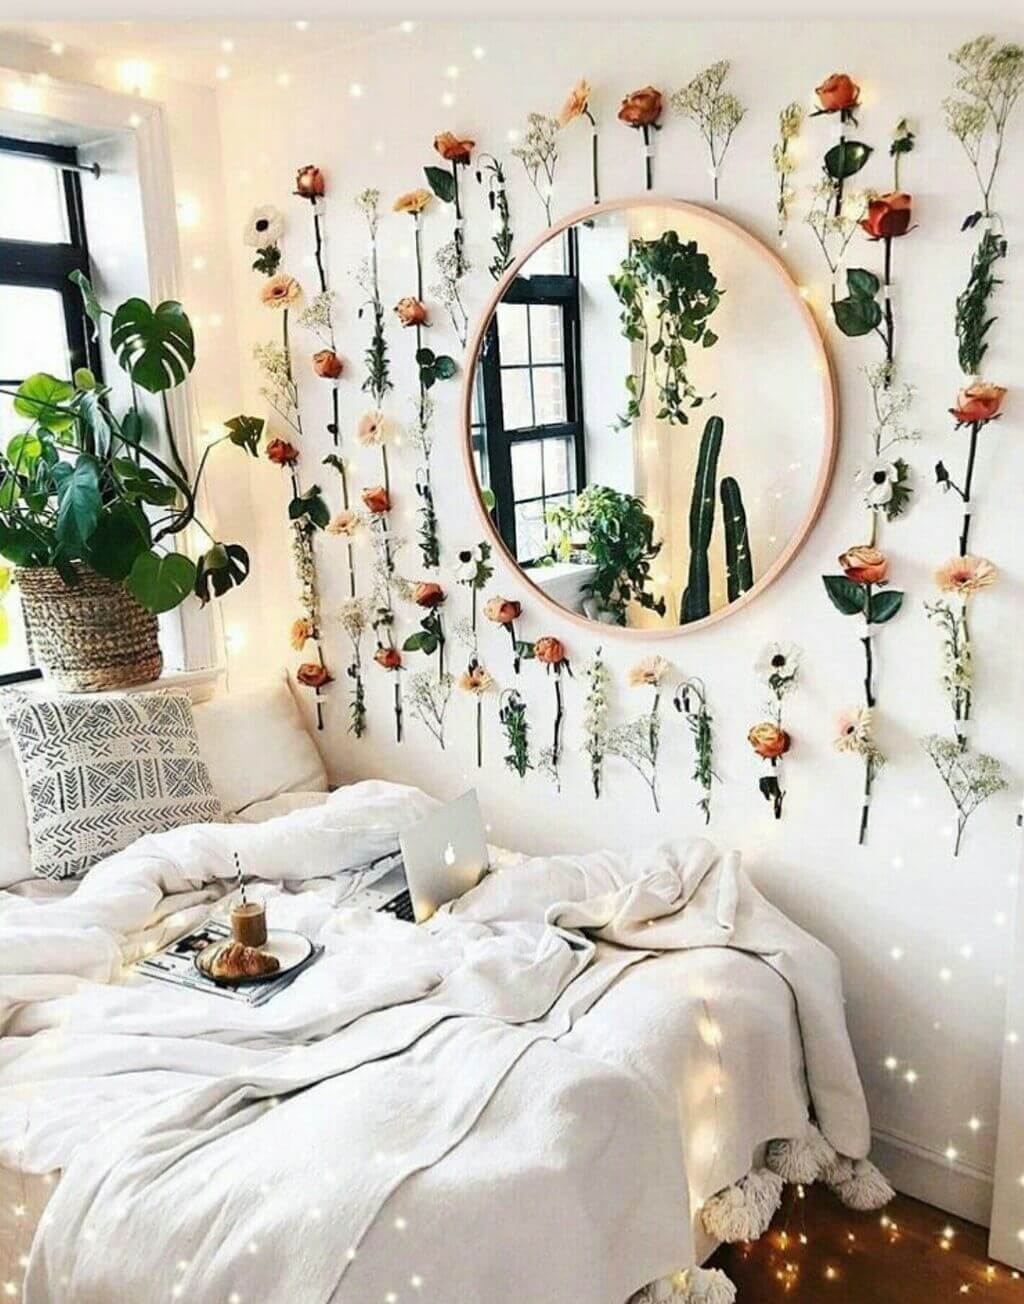 DIY Aesthetic Room Decor Using Flower Wall